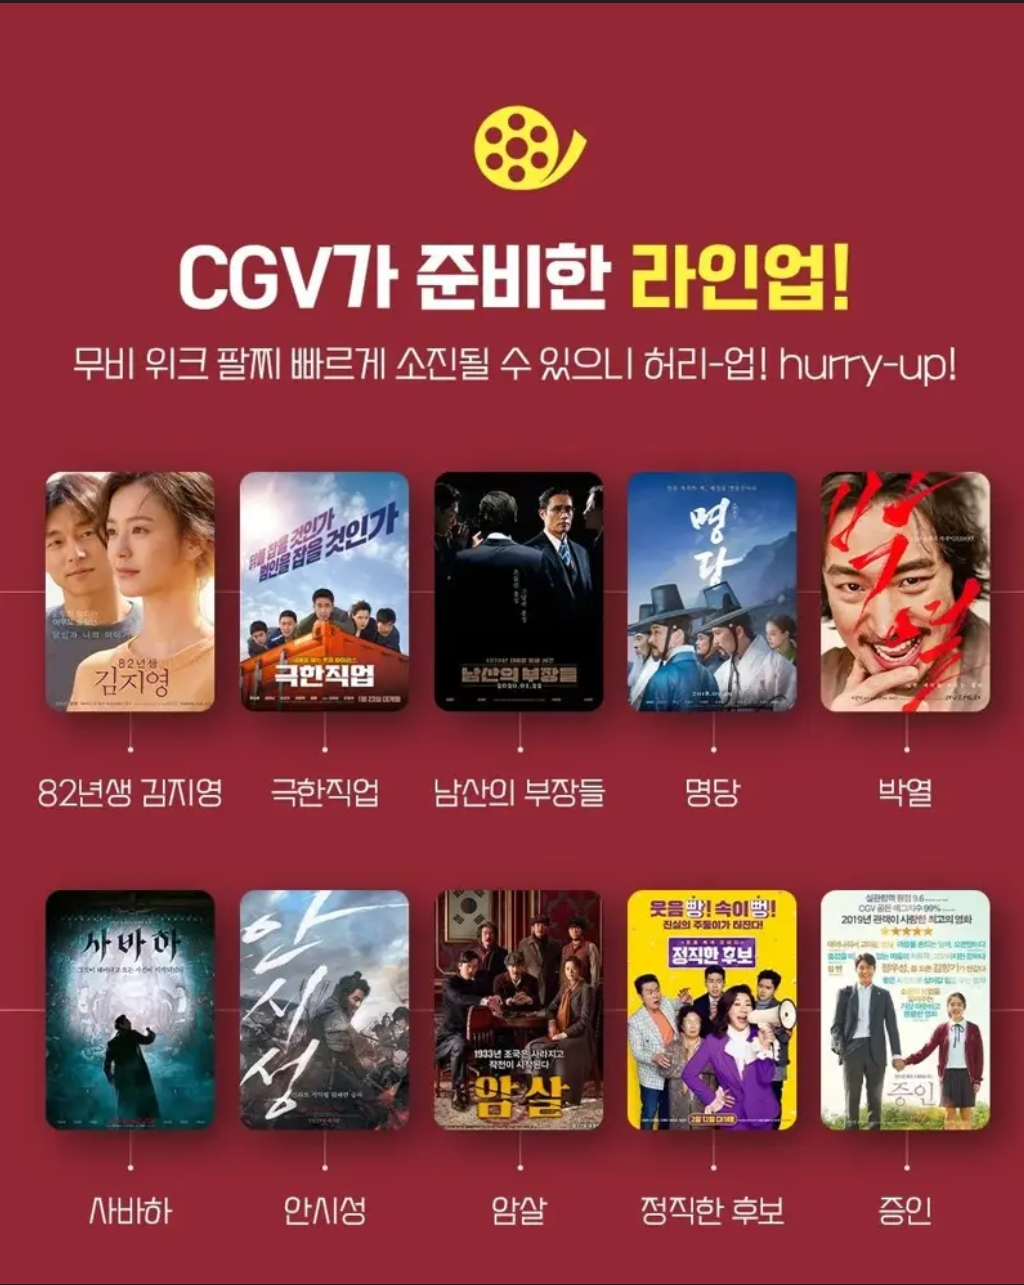 Starting tomorrow, 1,000 won movie week event CGV Lotte Cinema Megabox